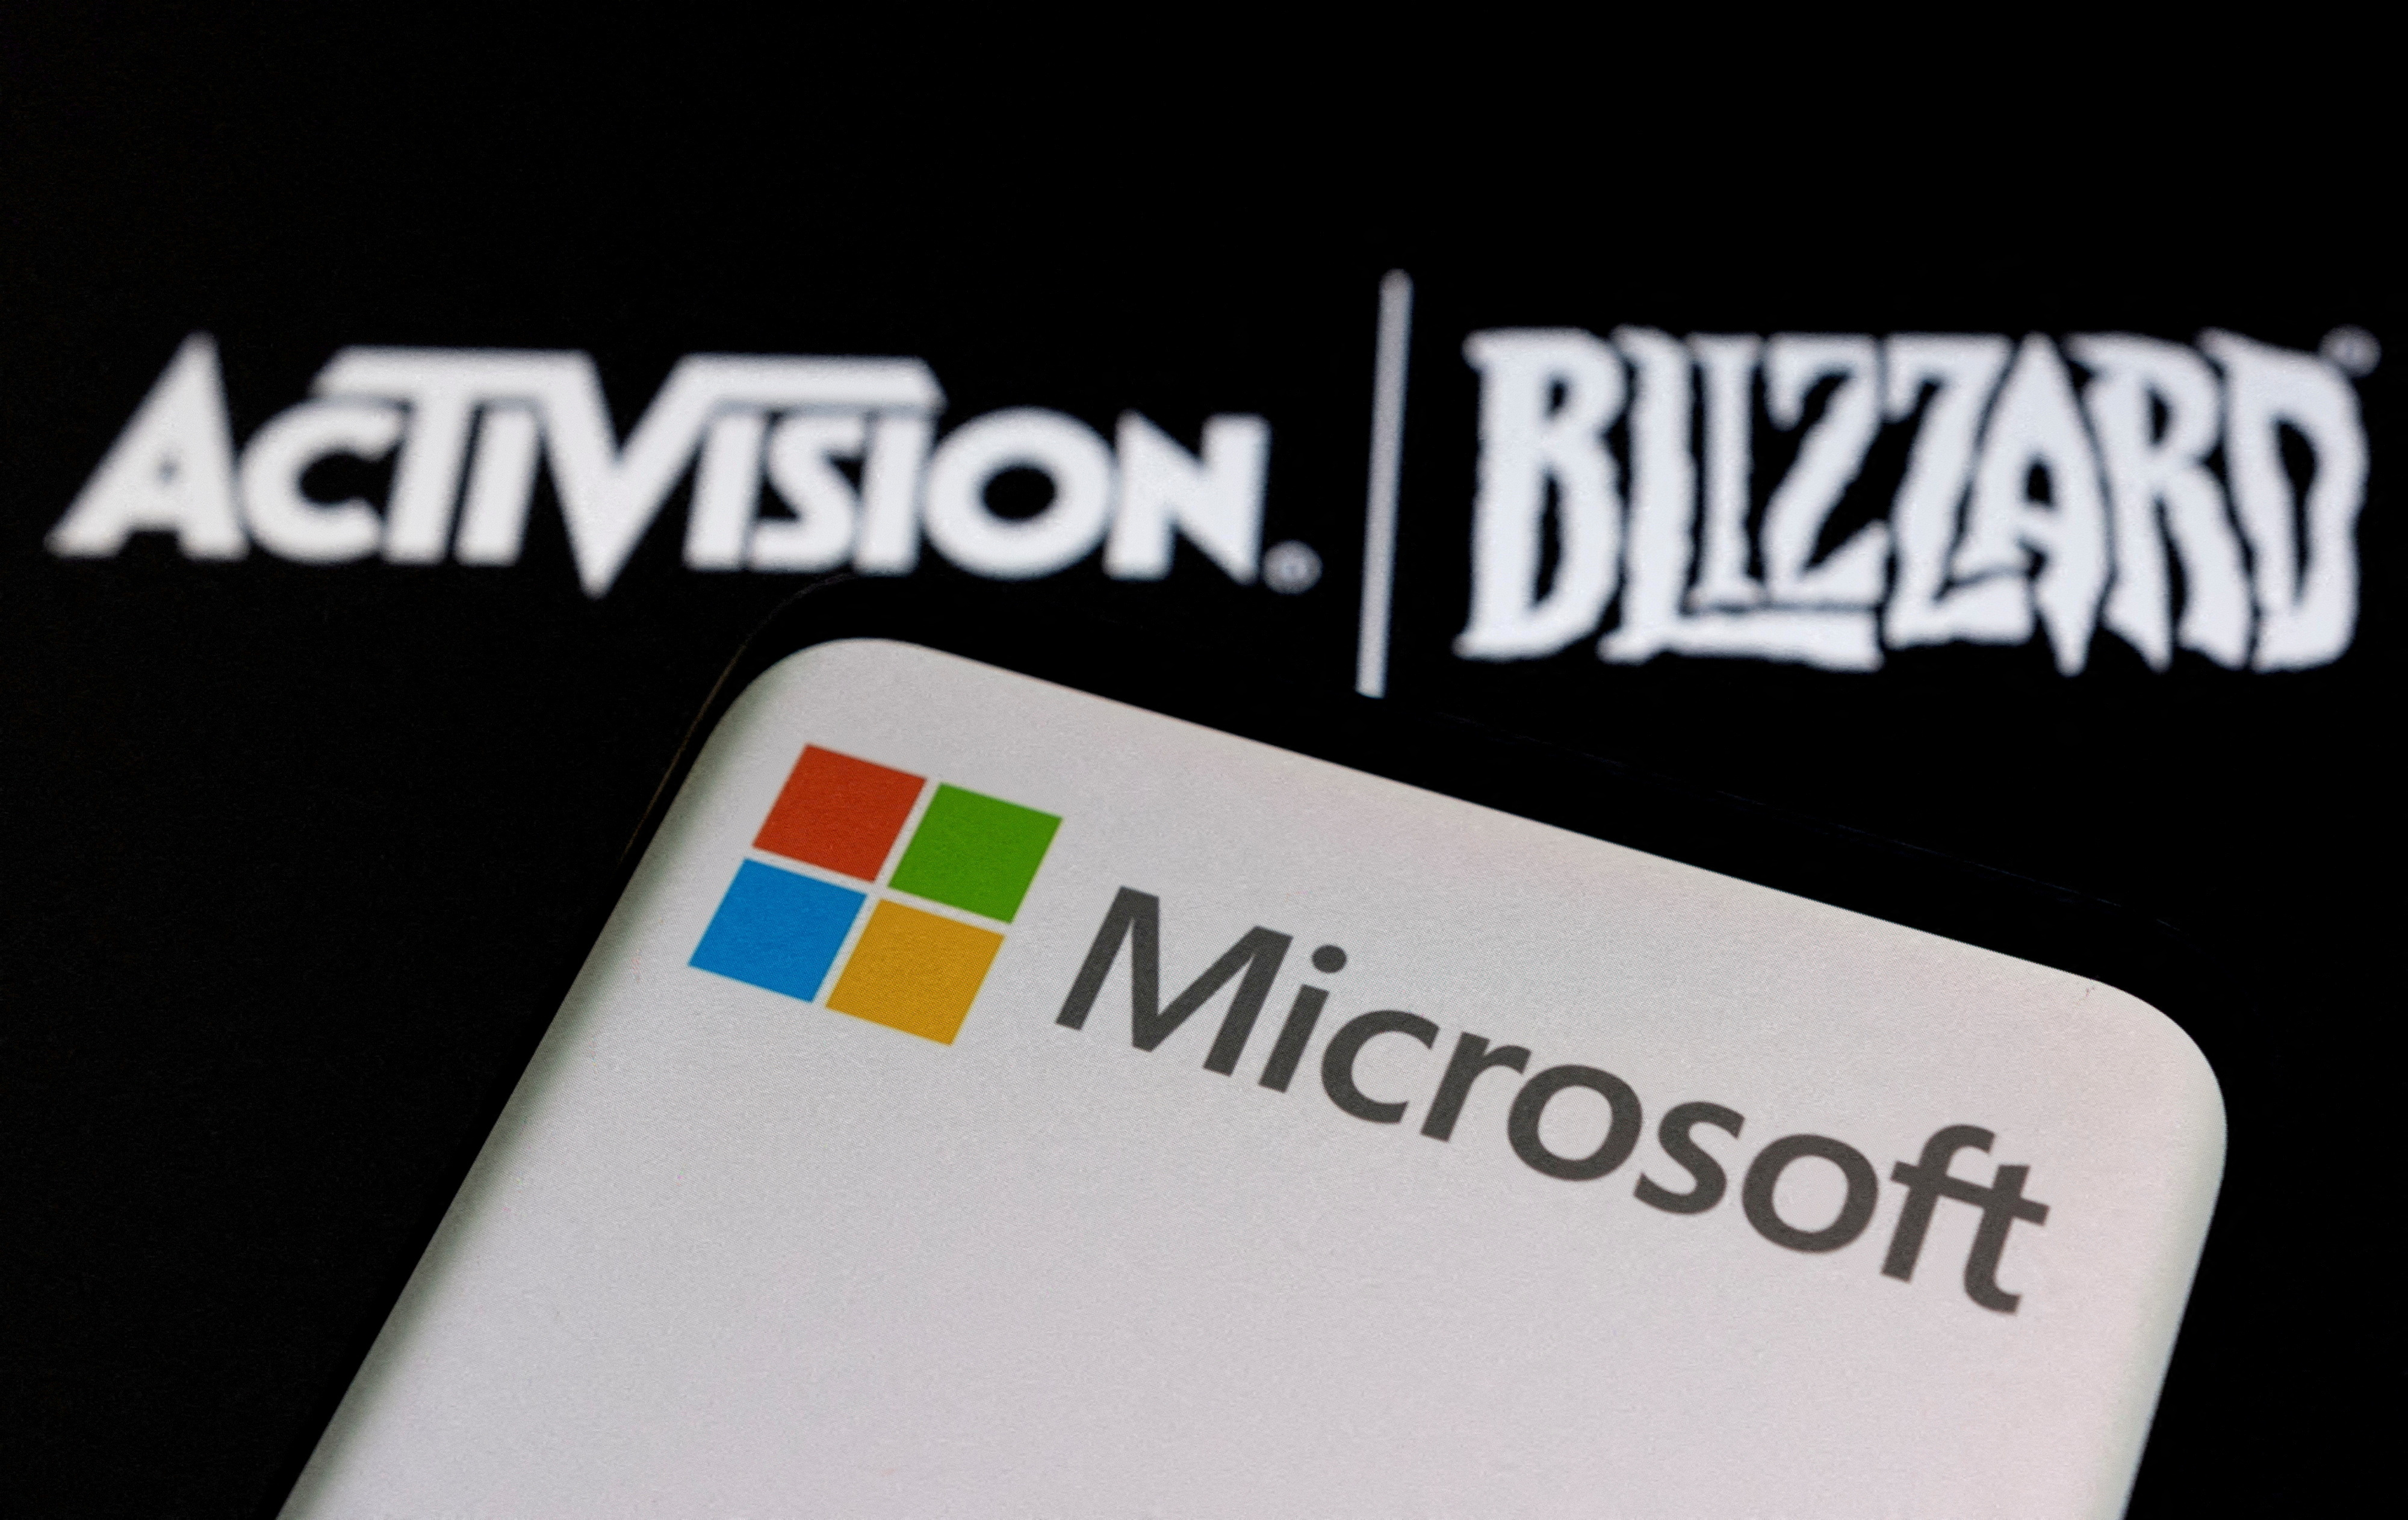 CMA blocks Microsoft-Activision merger